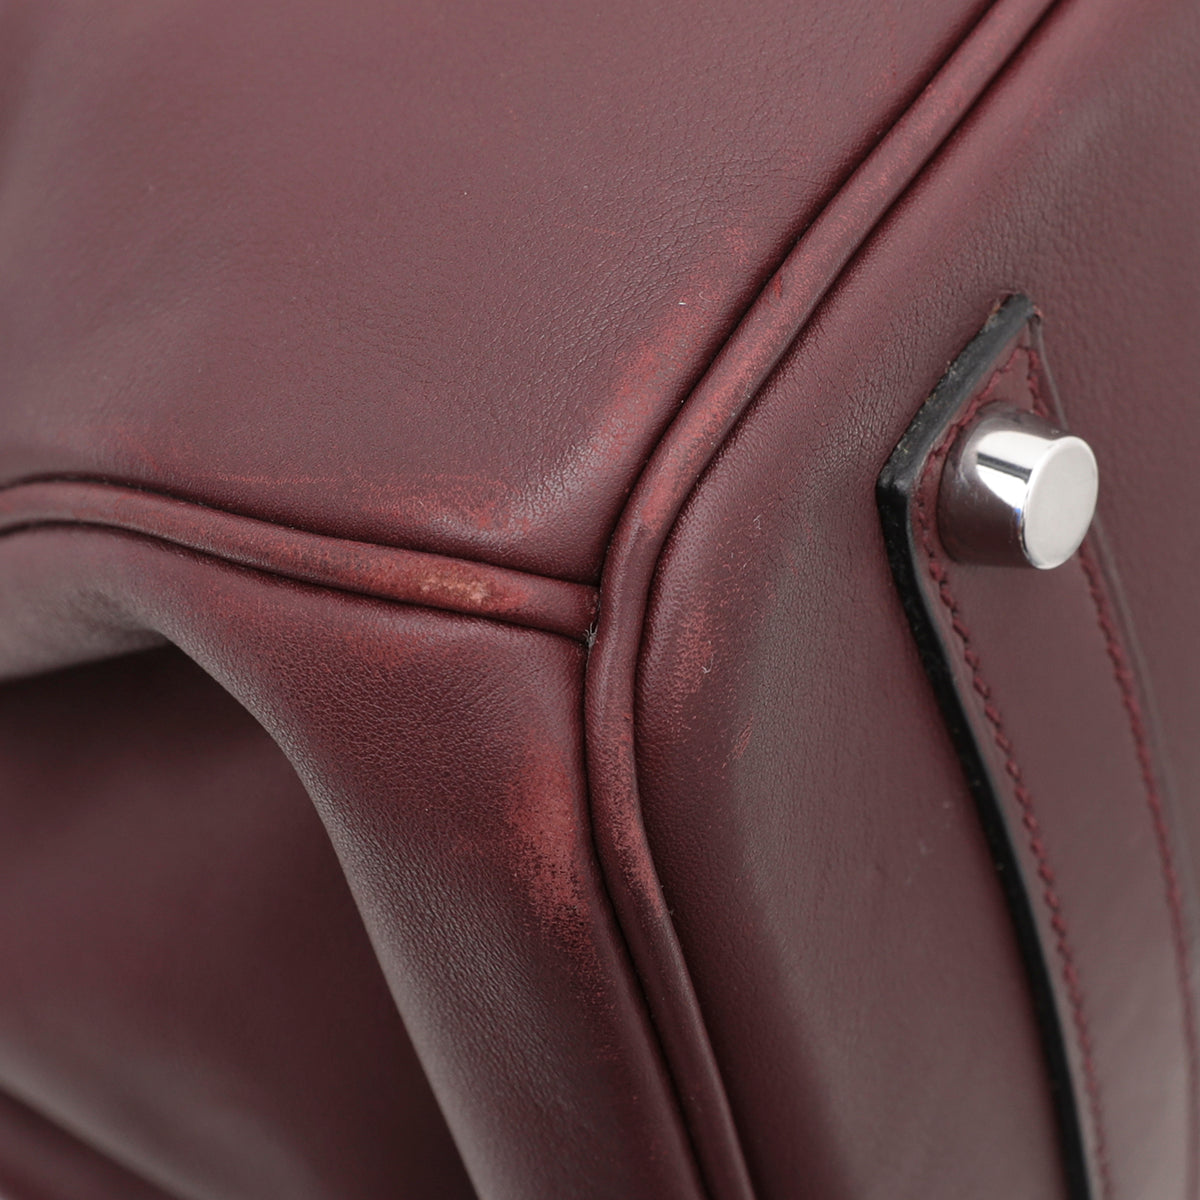 HERMES Birkin 35 Handbag Red Swift Leather